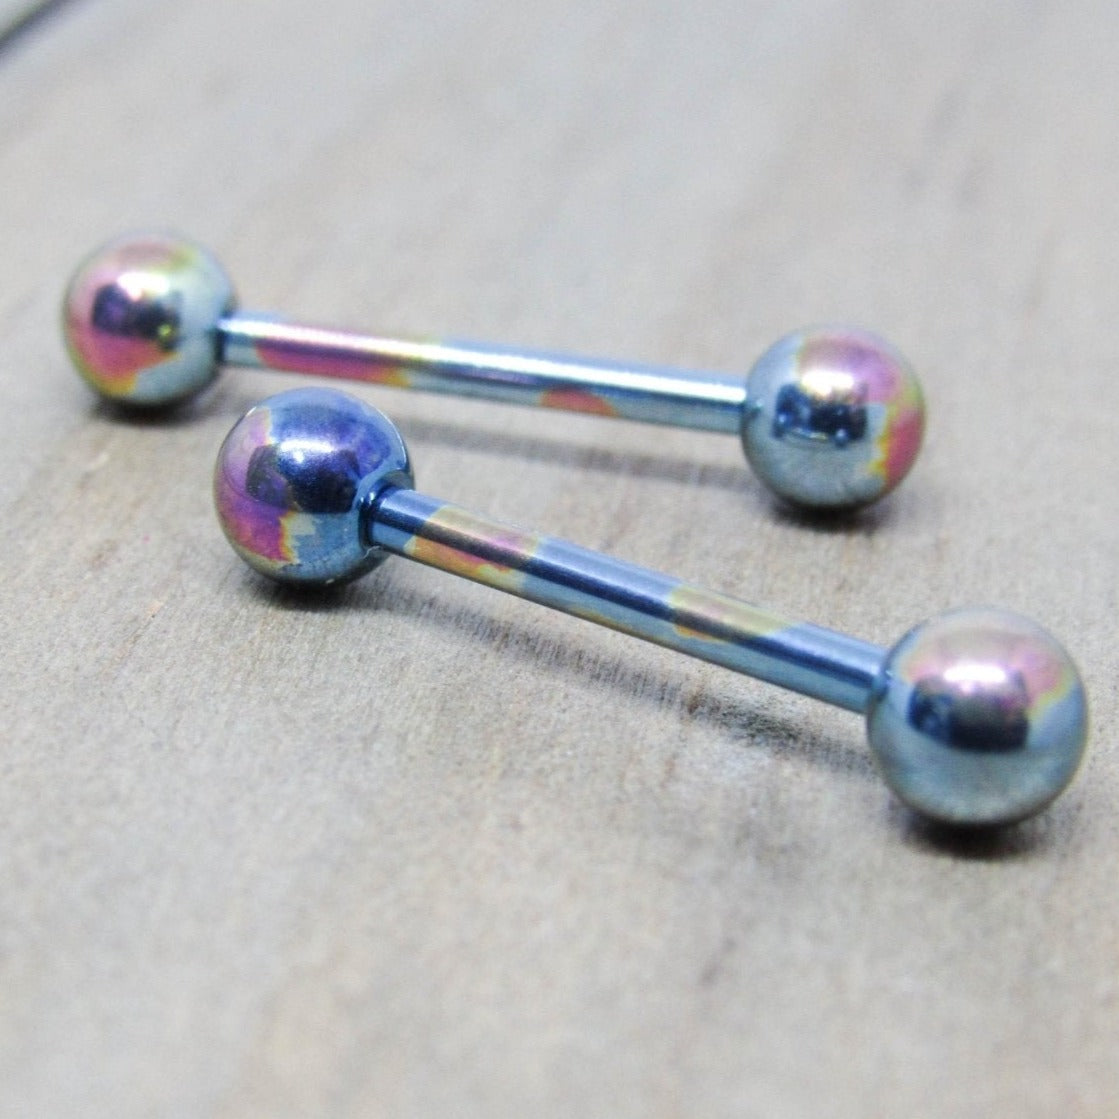 14g titanium anodized nipple piercing barbell set oilslick